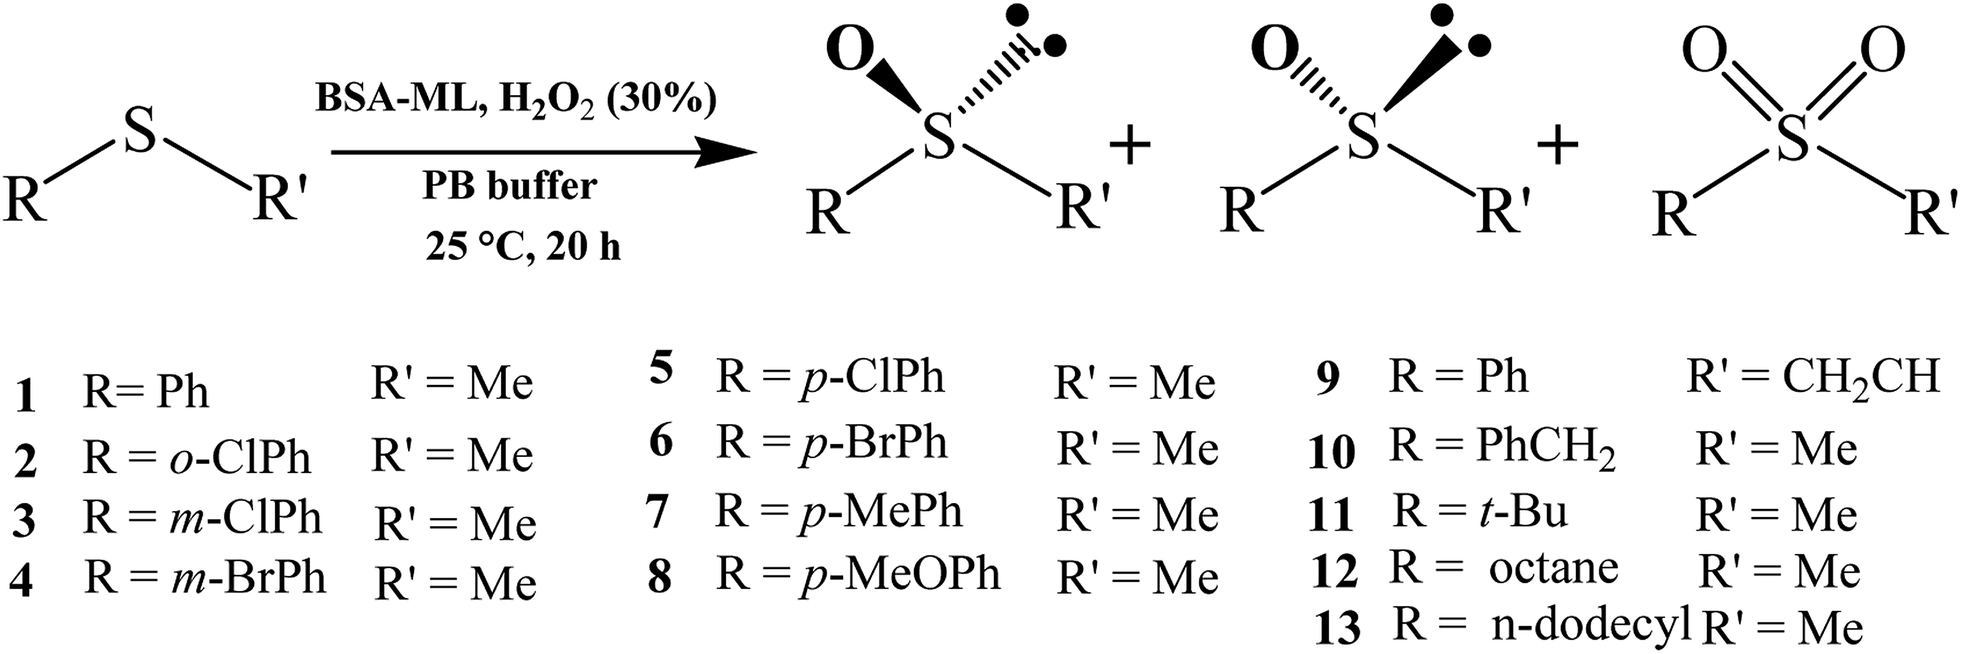 Schiff Base Complex Conjugates Of Bovine Serum Albumin As Artificial Metalloenzymes For Eco Friendly Enantioselective Sulfoxidation Rsc Advances Rsc Publishing